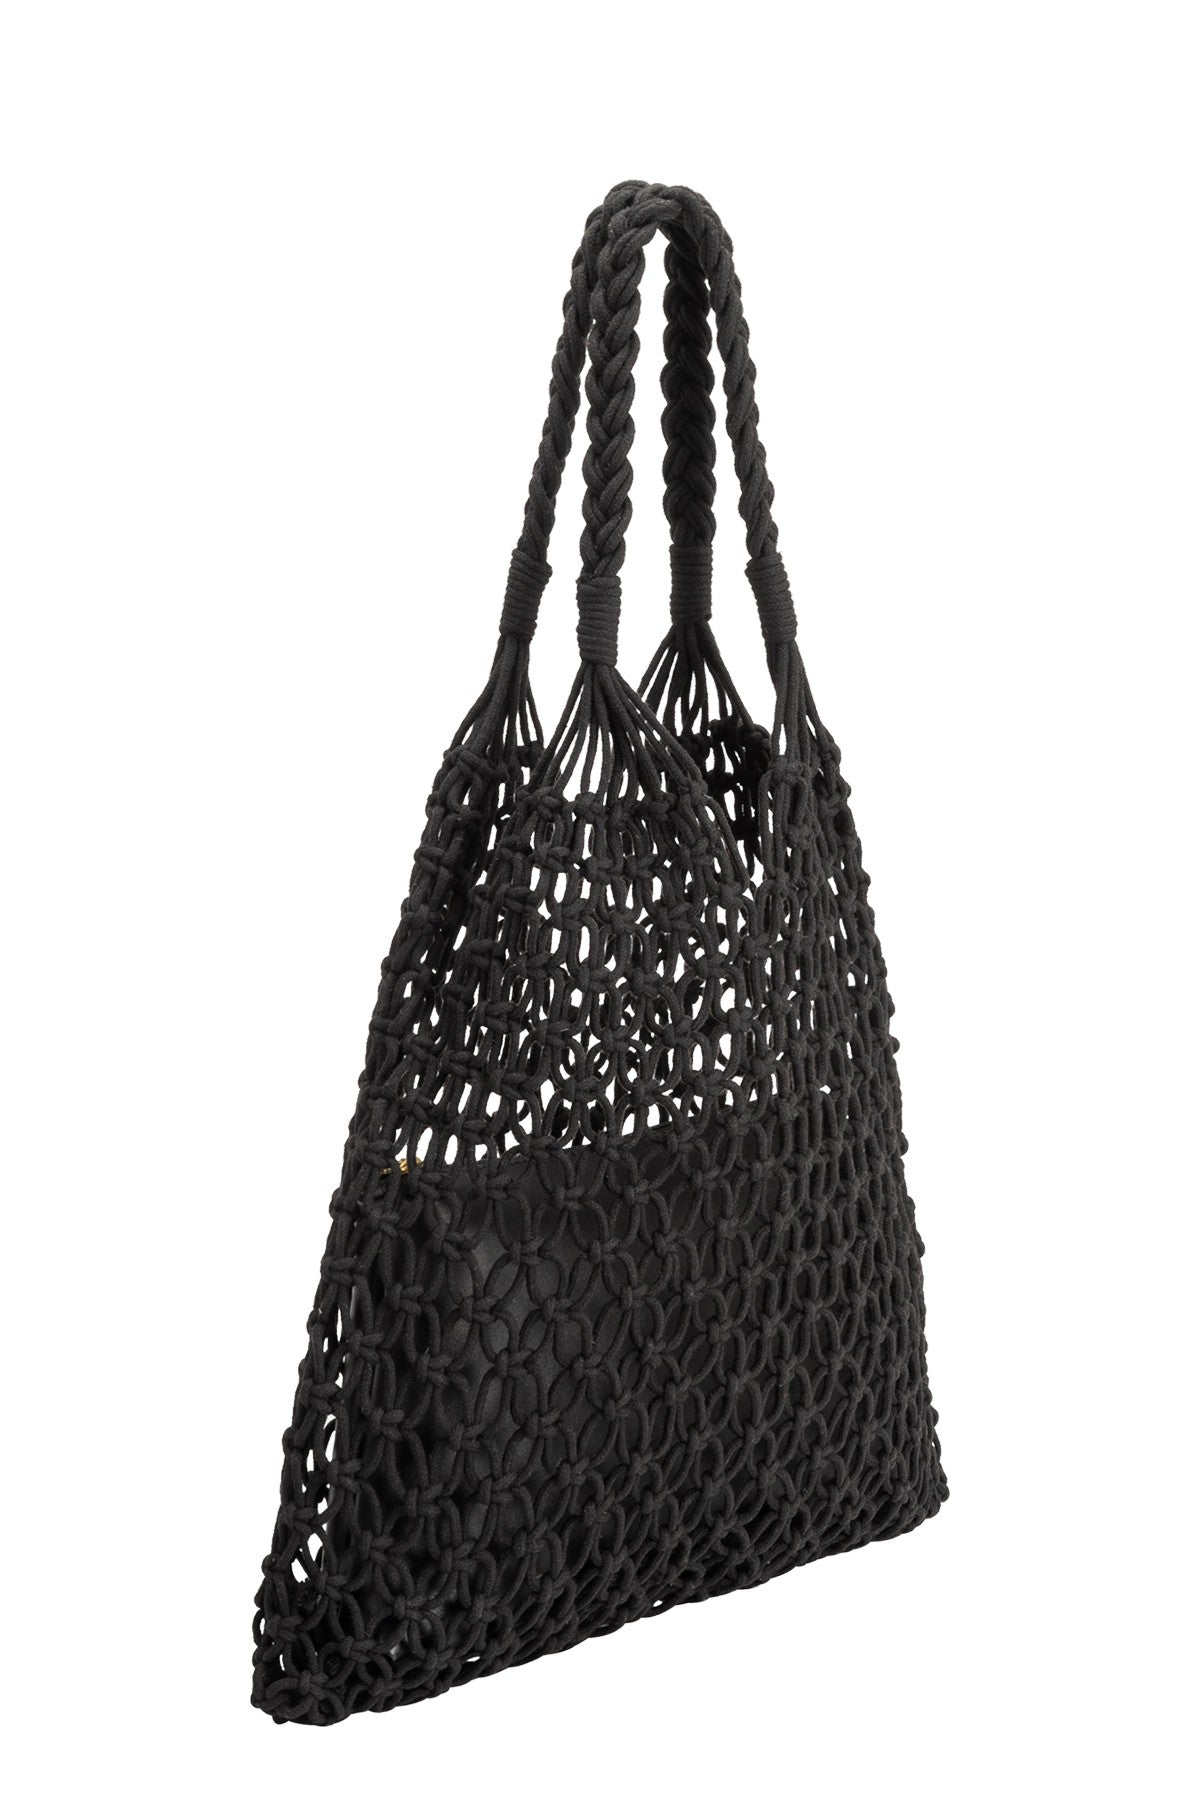 Izzy Black Medium Shoulder Bag | Collective Request 